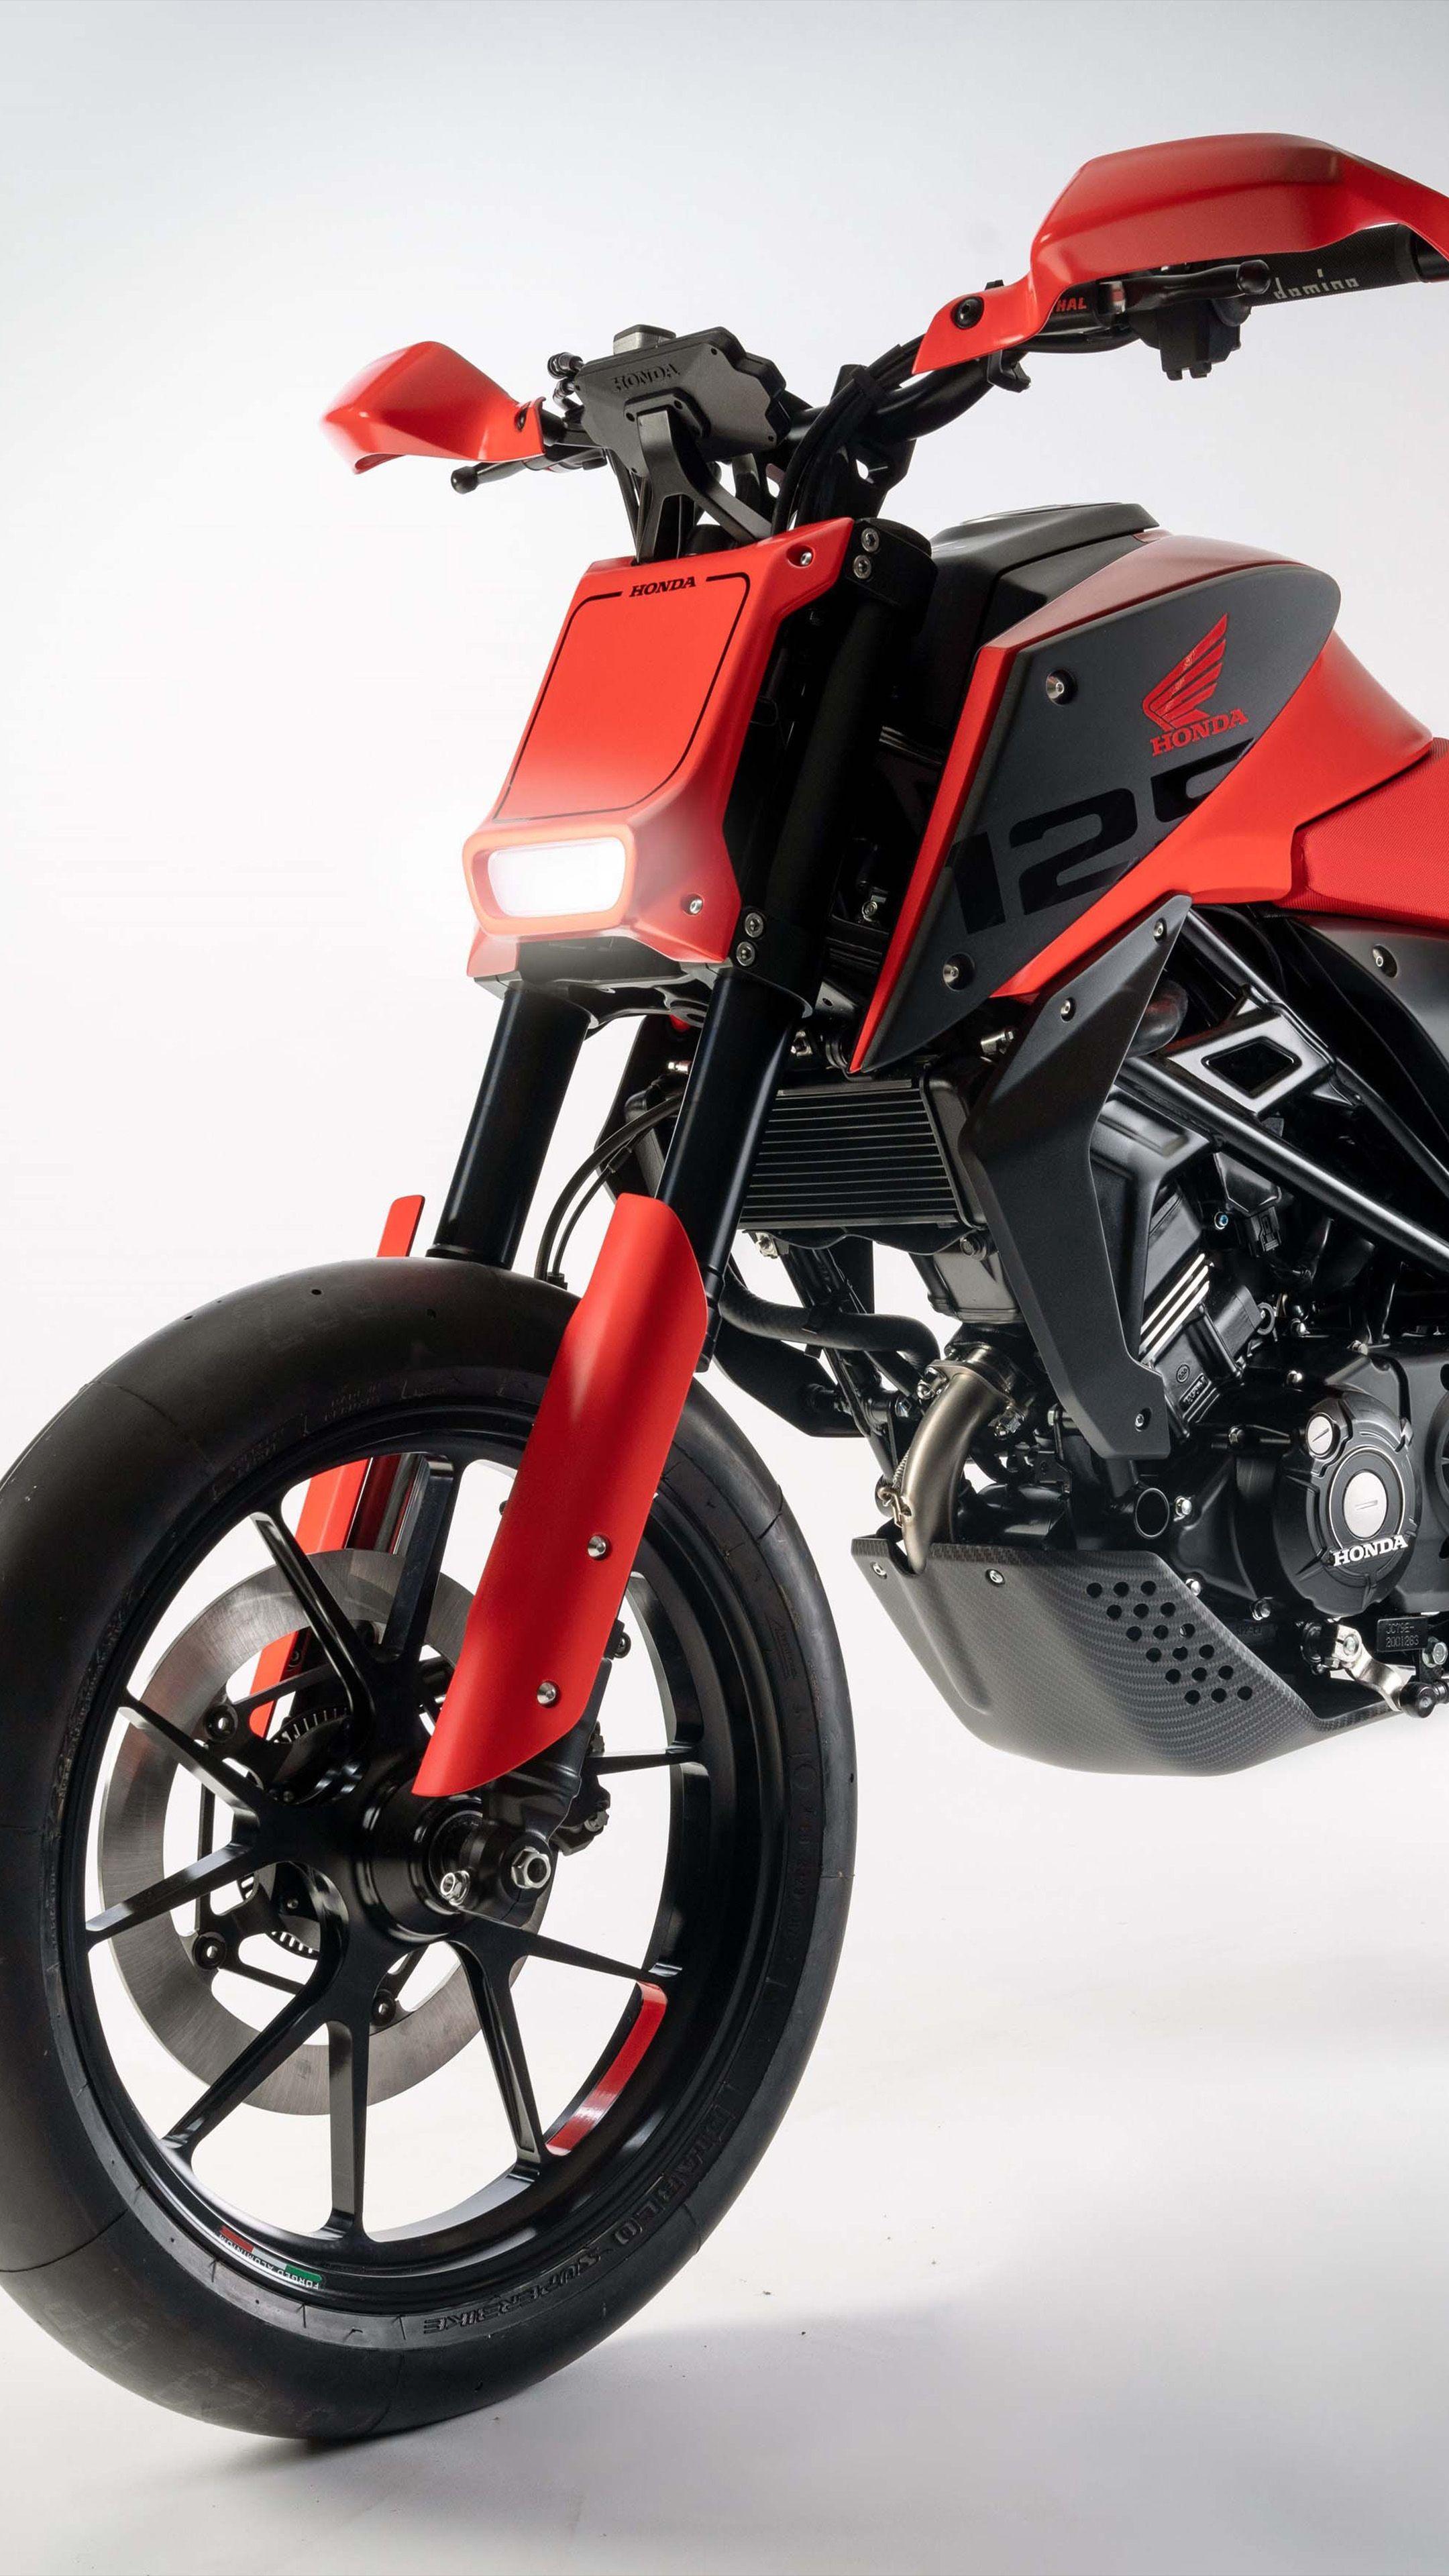 Honda CB125M Concept Bike 4K Ultra HD Mobile Wallpaper. Super bikes, Moto bike, Motorcycle bike